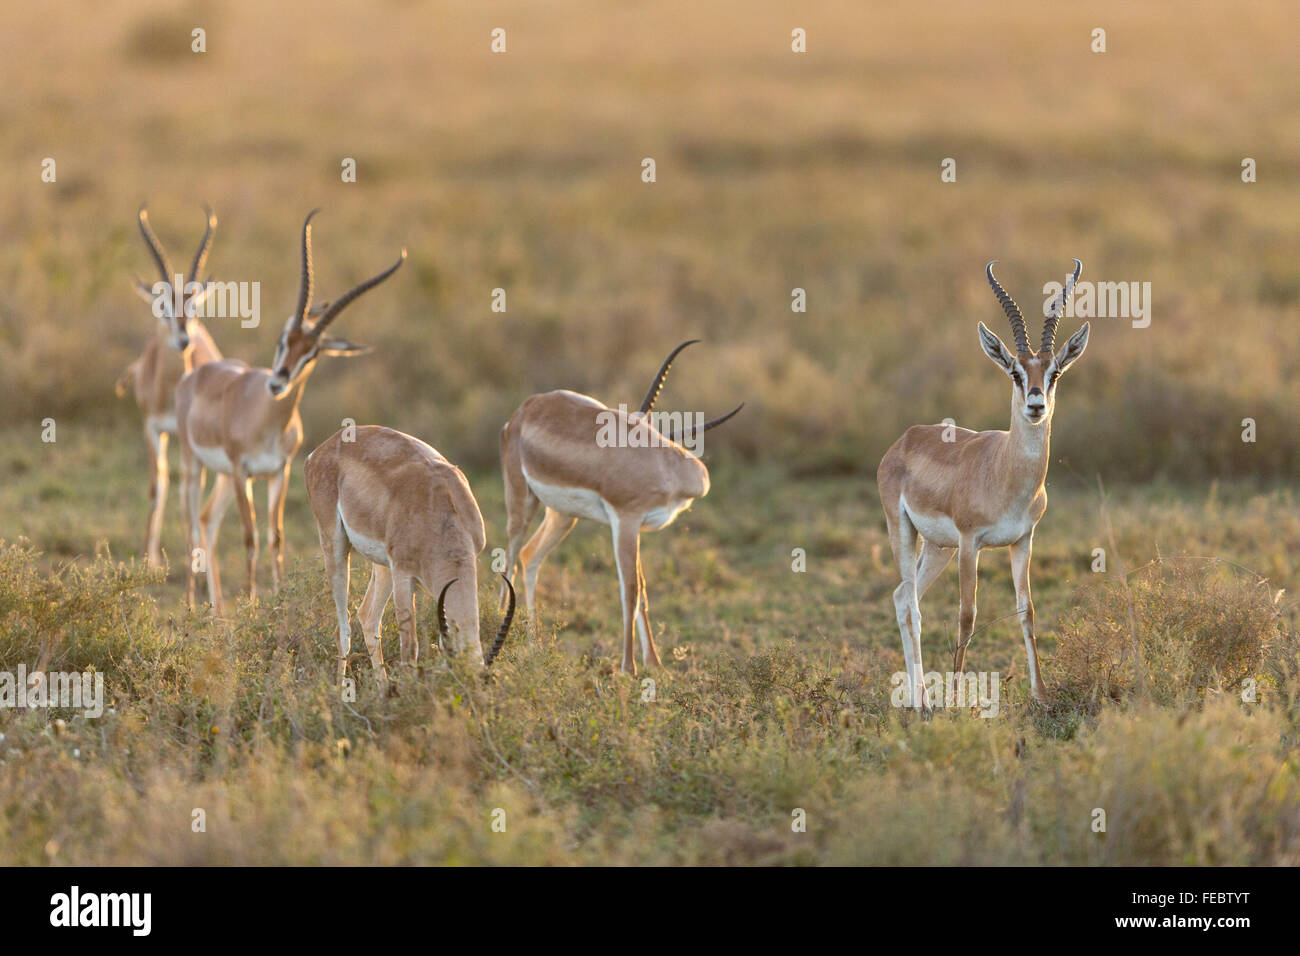 Grant Gazelle feeding and grooming in the Serengeti National Park Tanzania Stock Photo